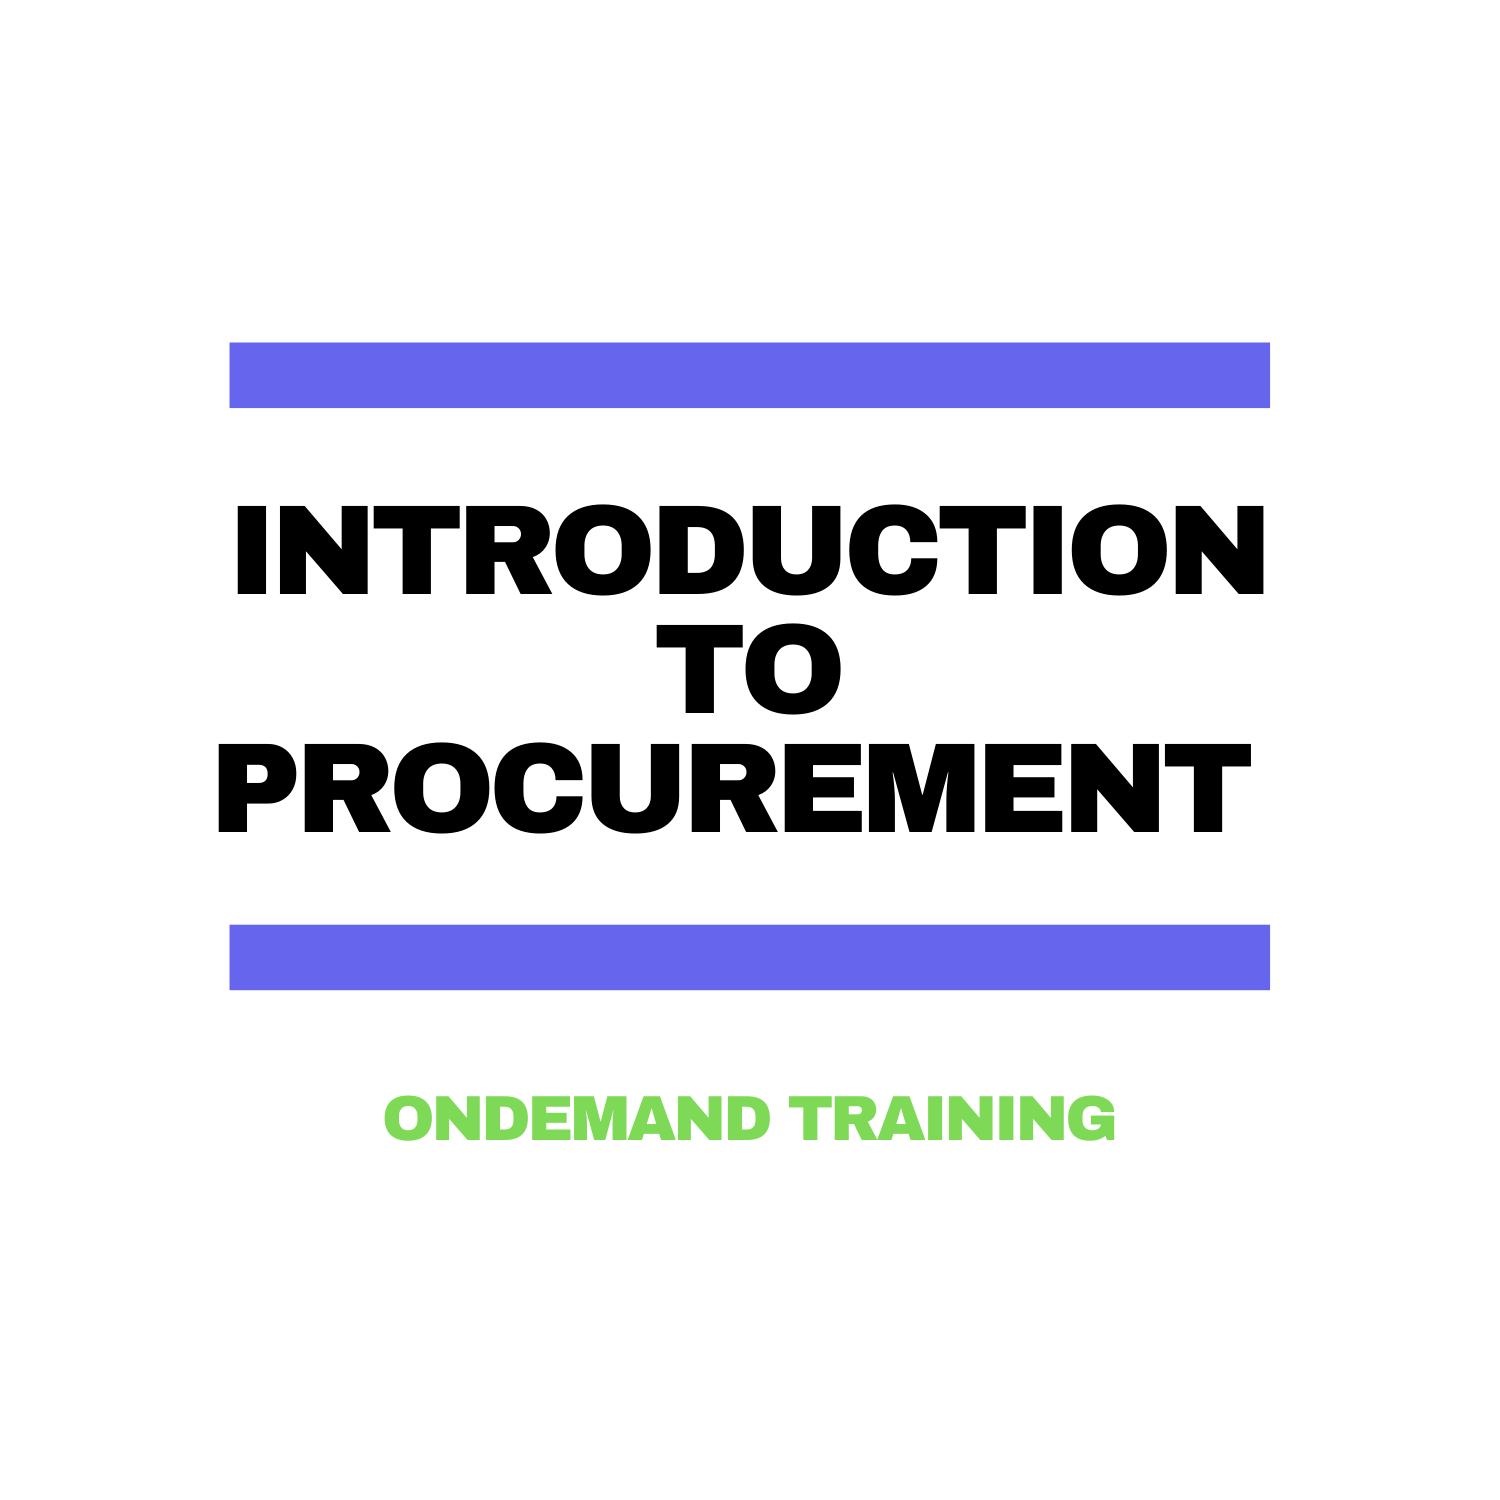 Introduction to Procurement